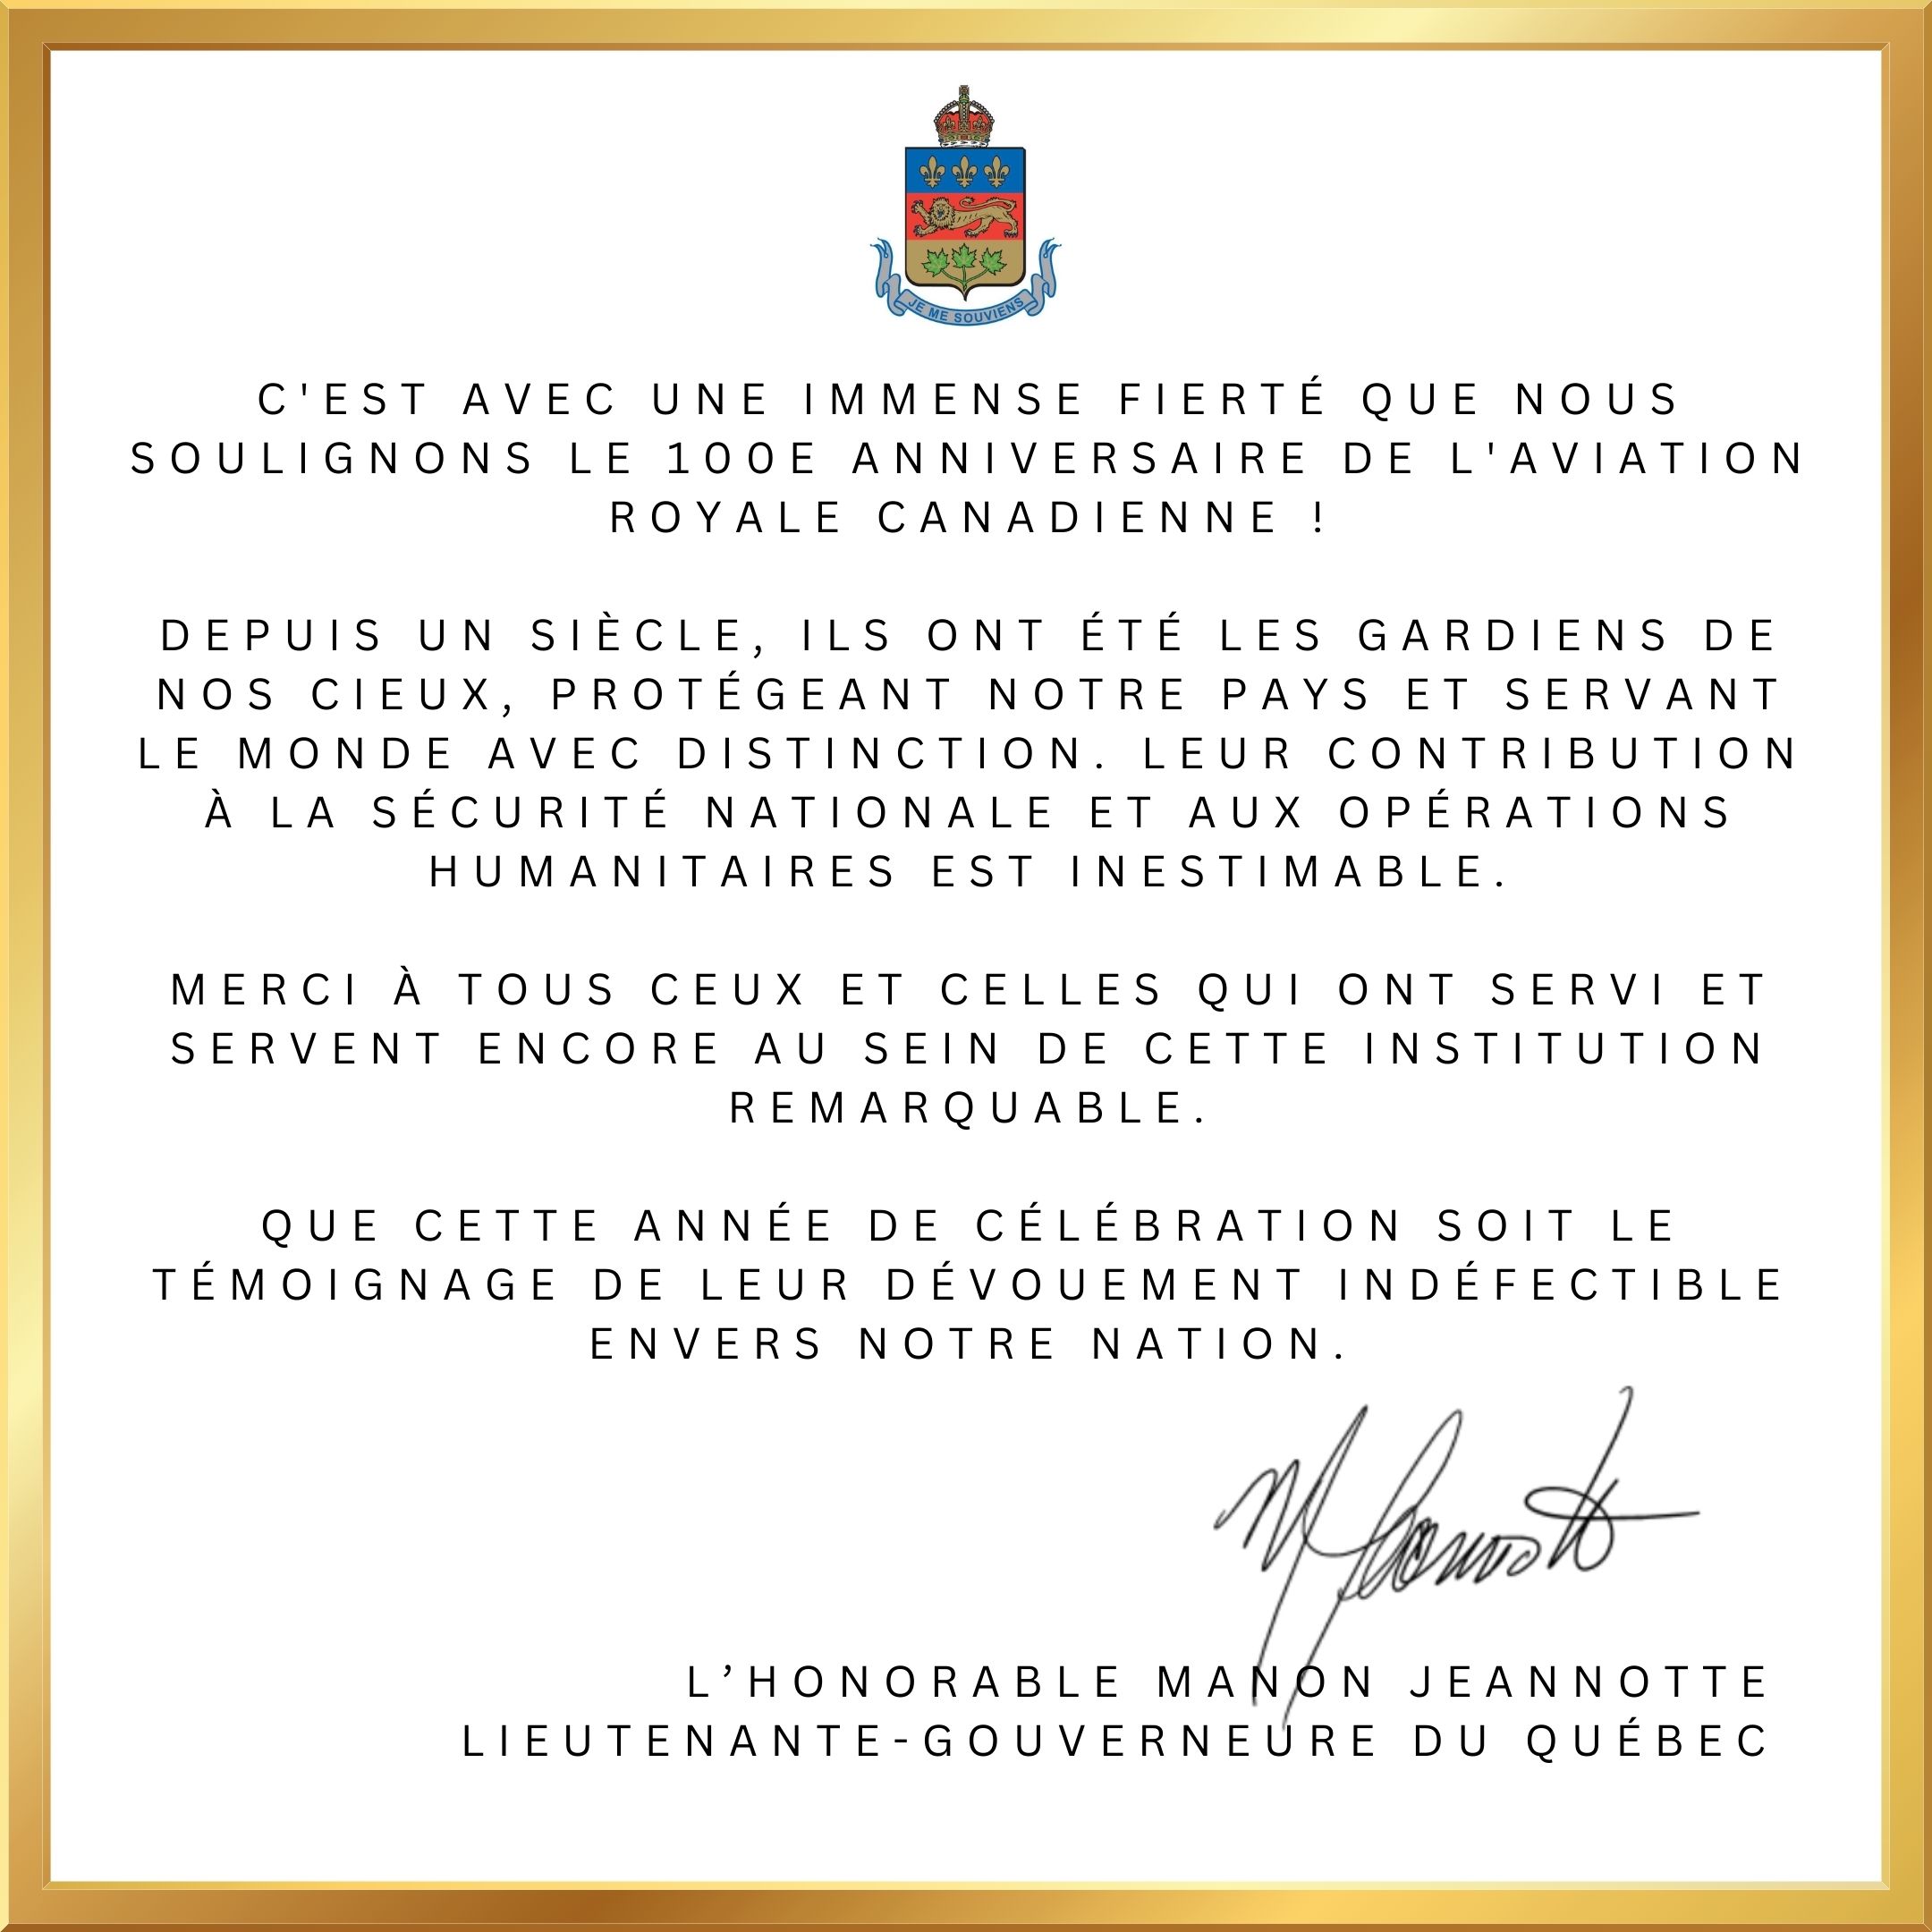 Royal Canadian Air Force 100th anniversary

